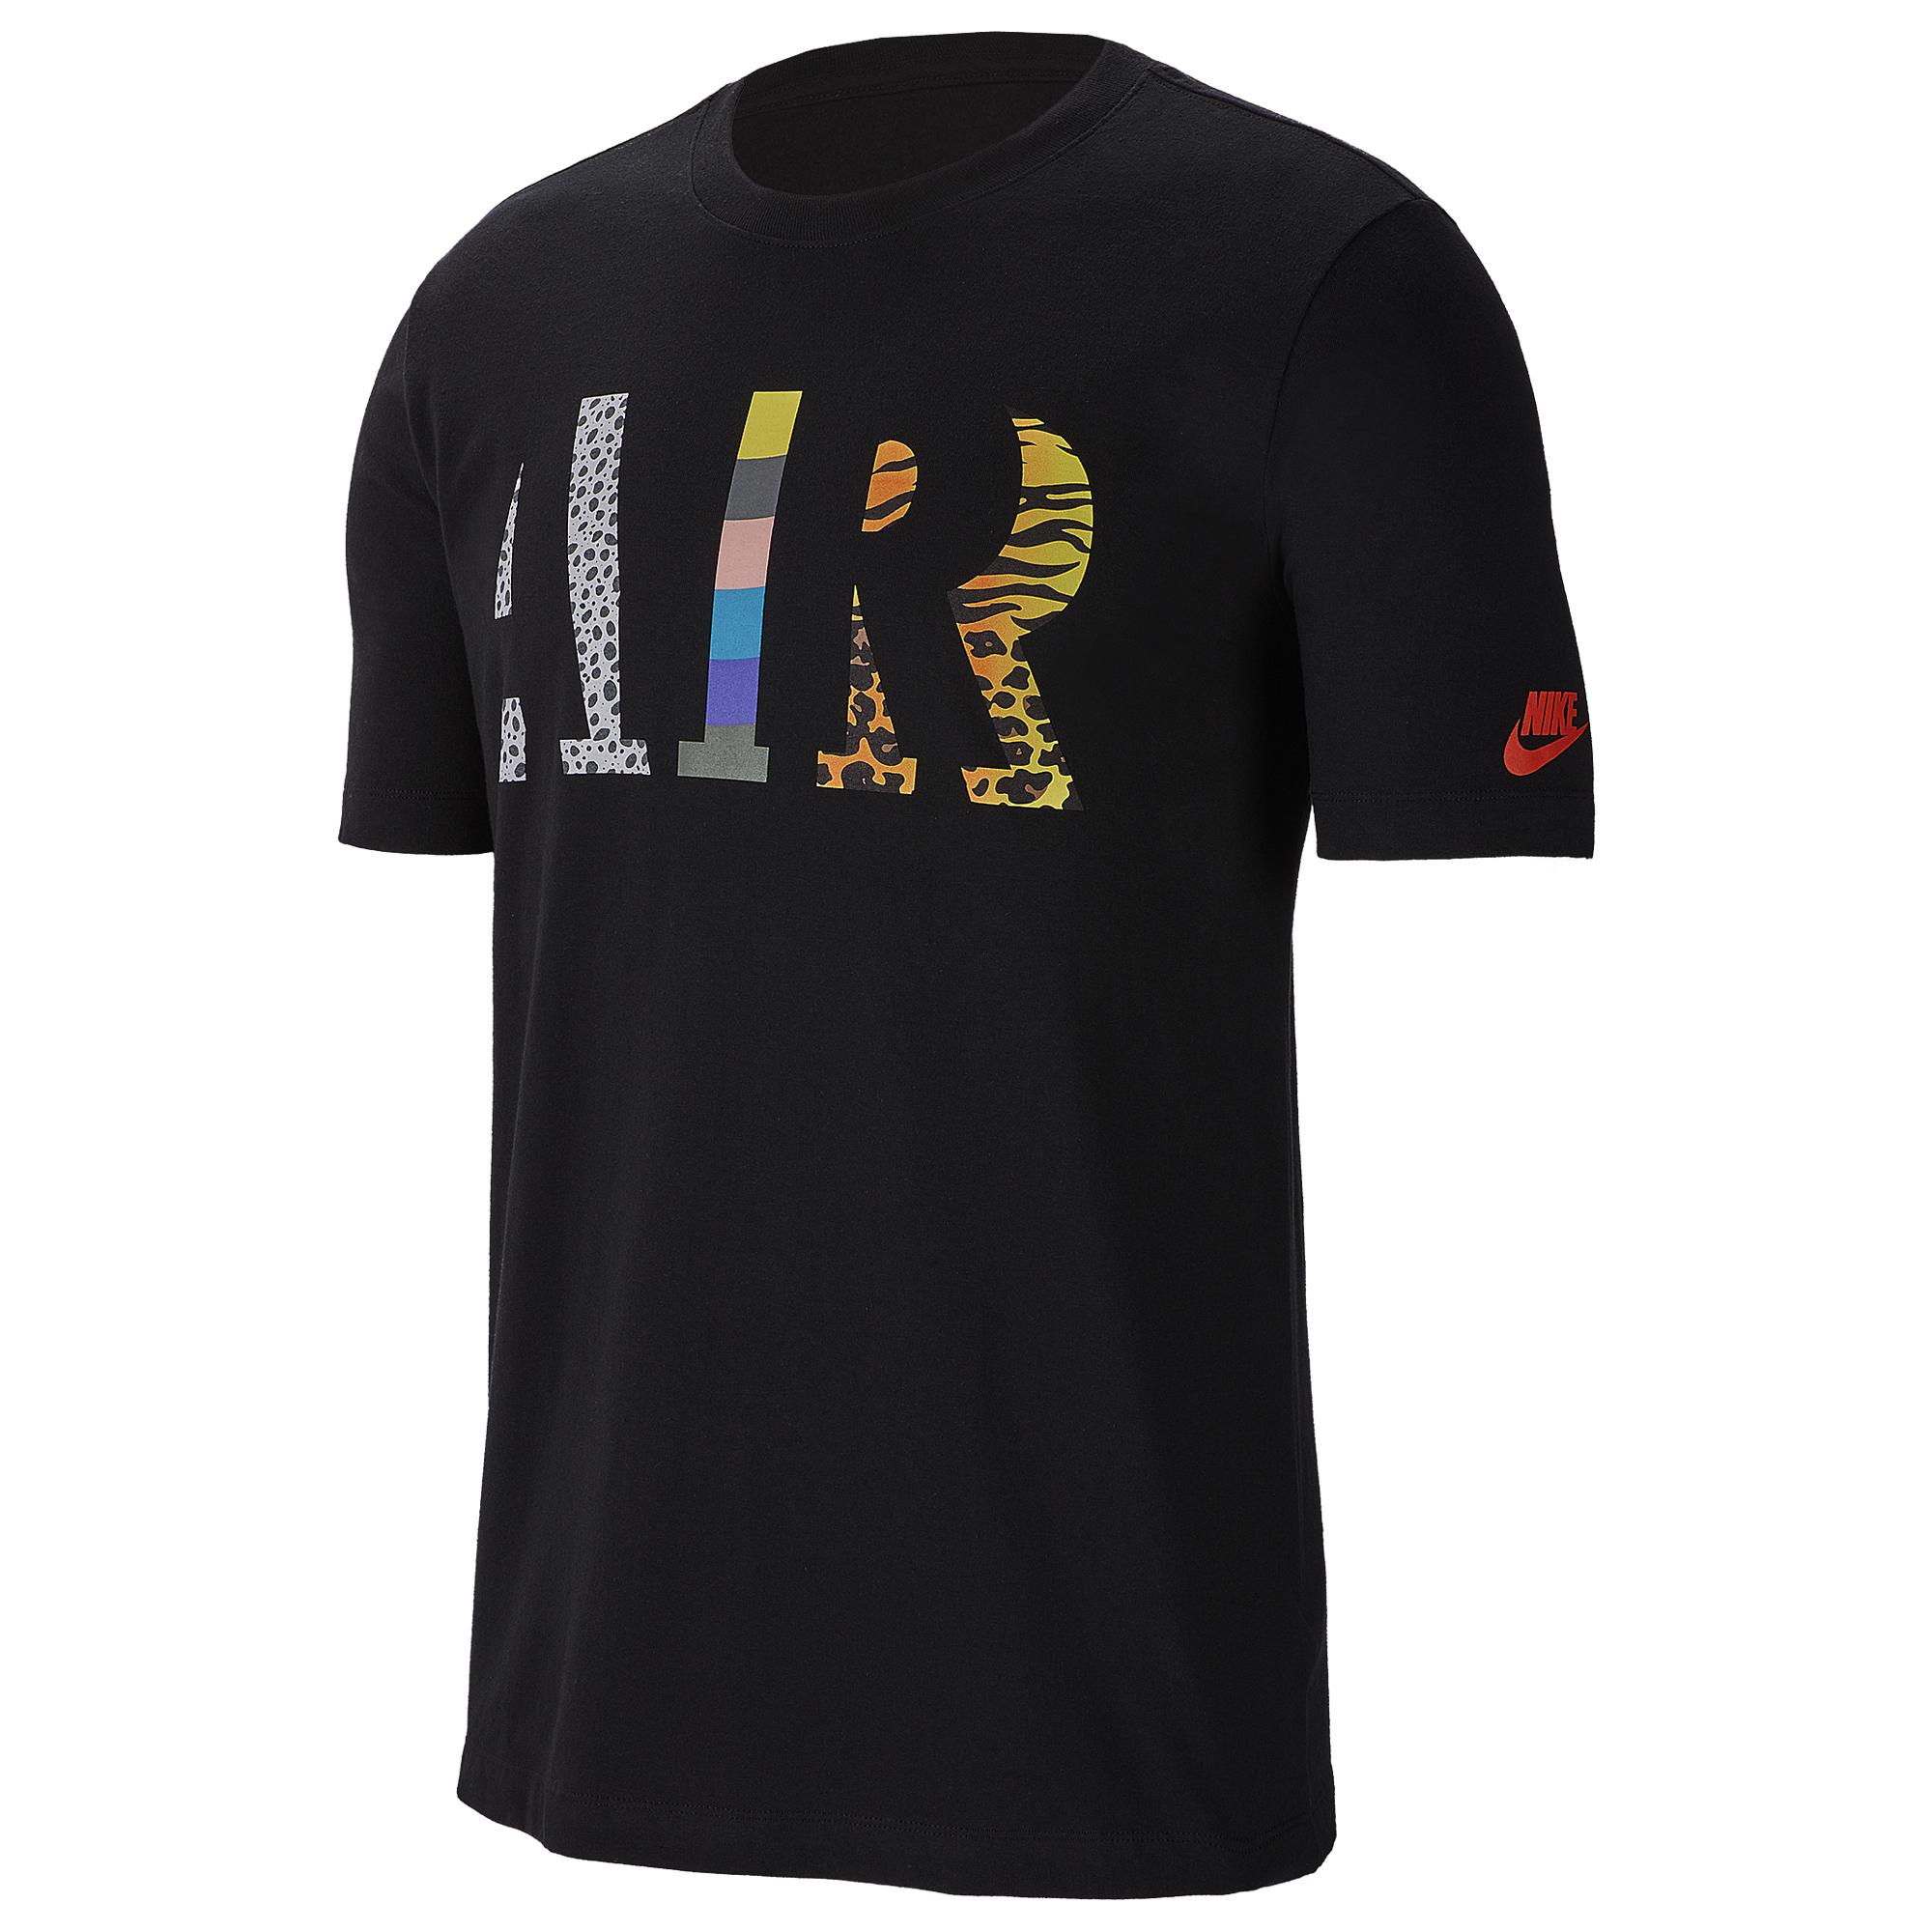 Nike Heritage Air Max T-shirt in Black for Men - Lyst